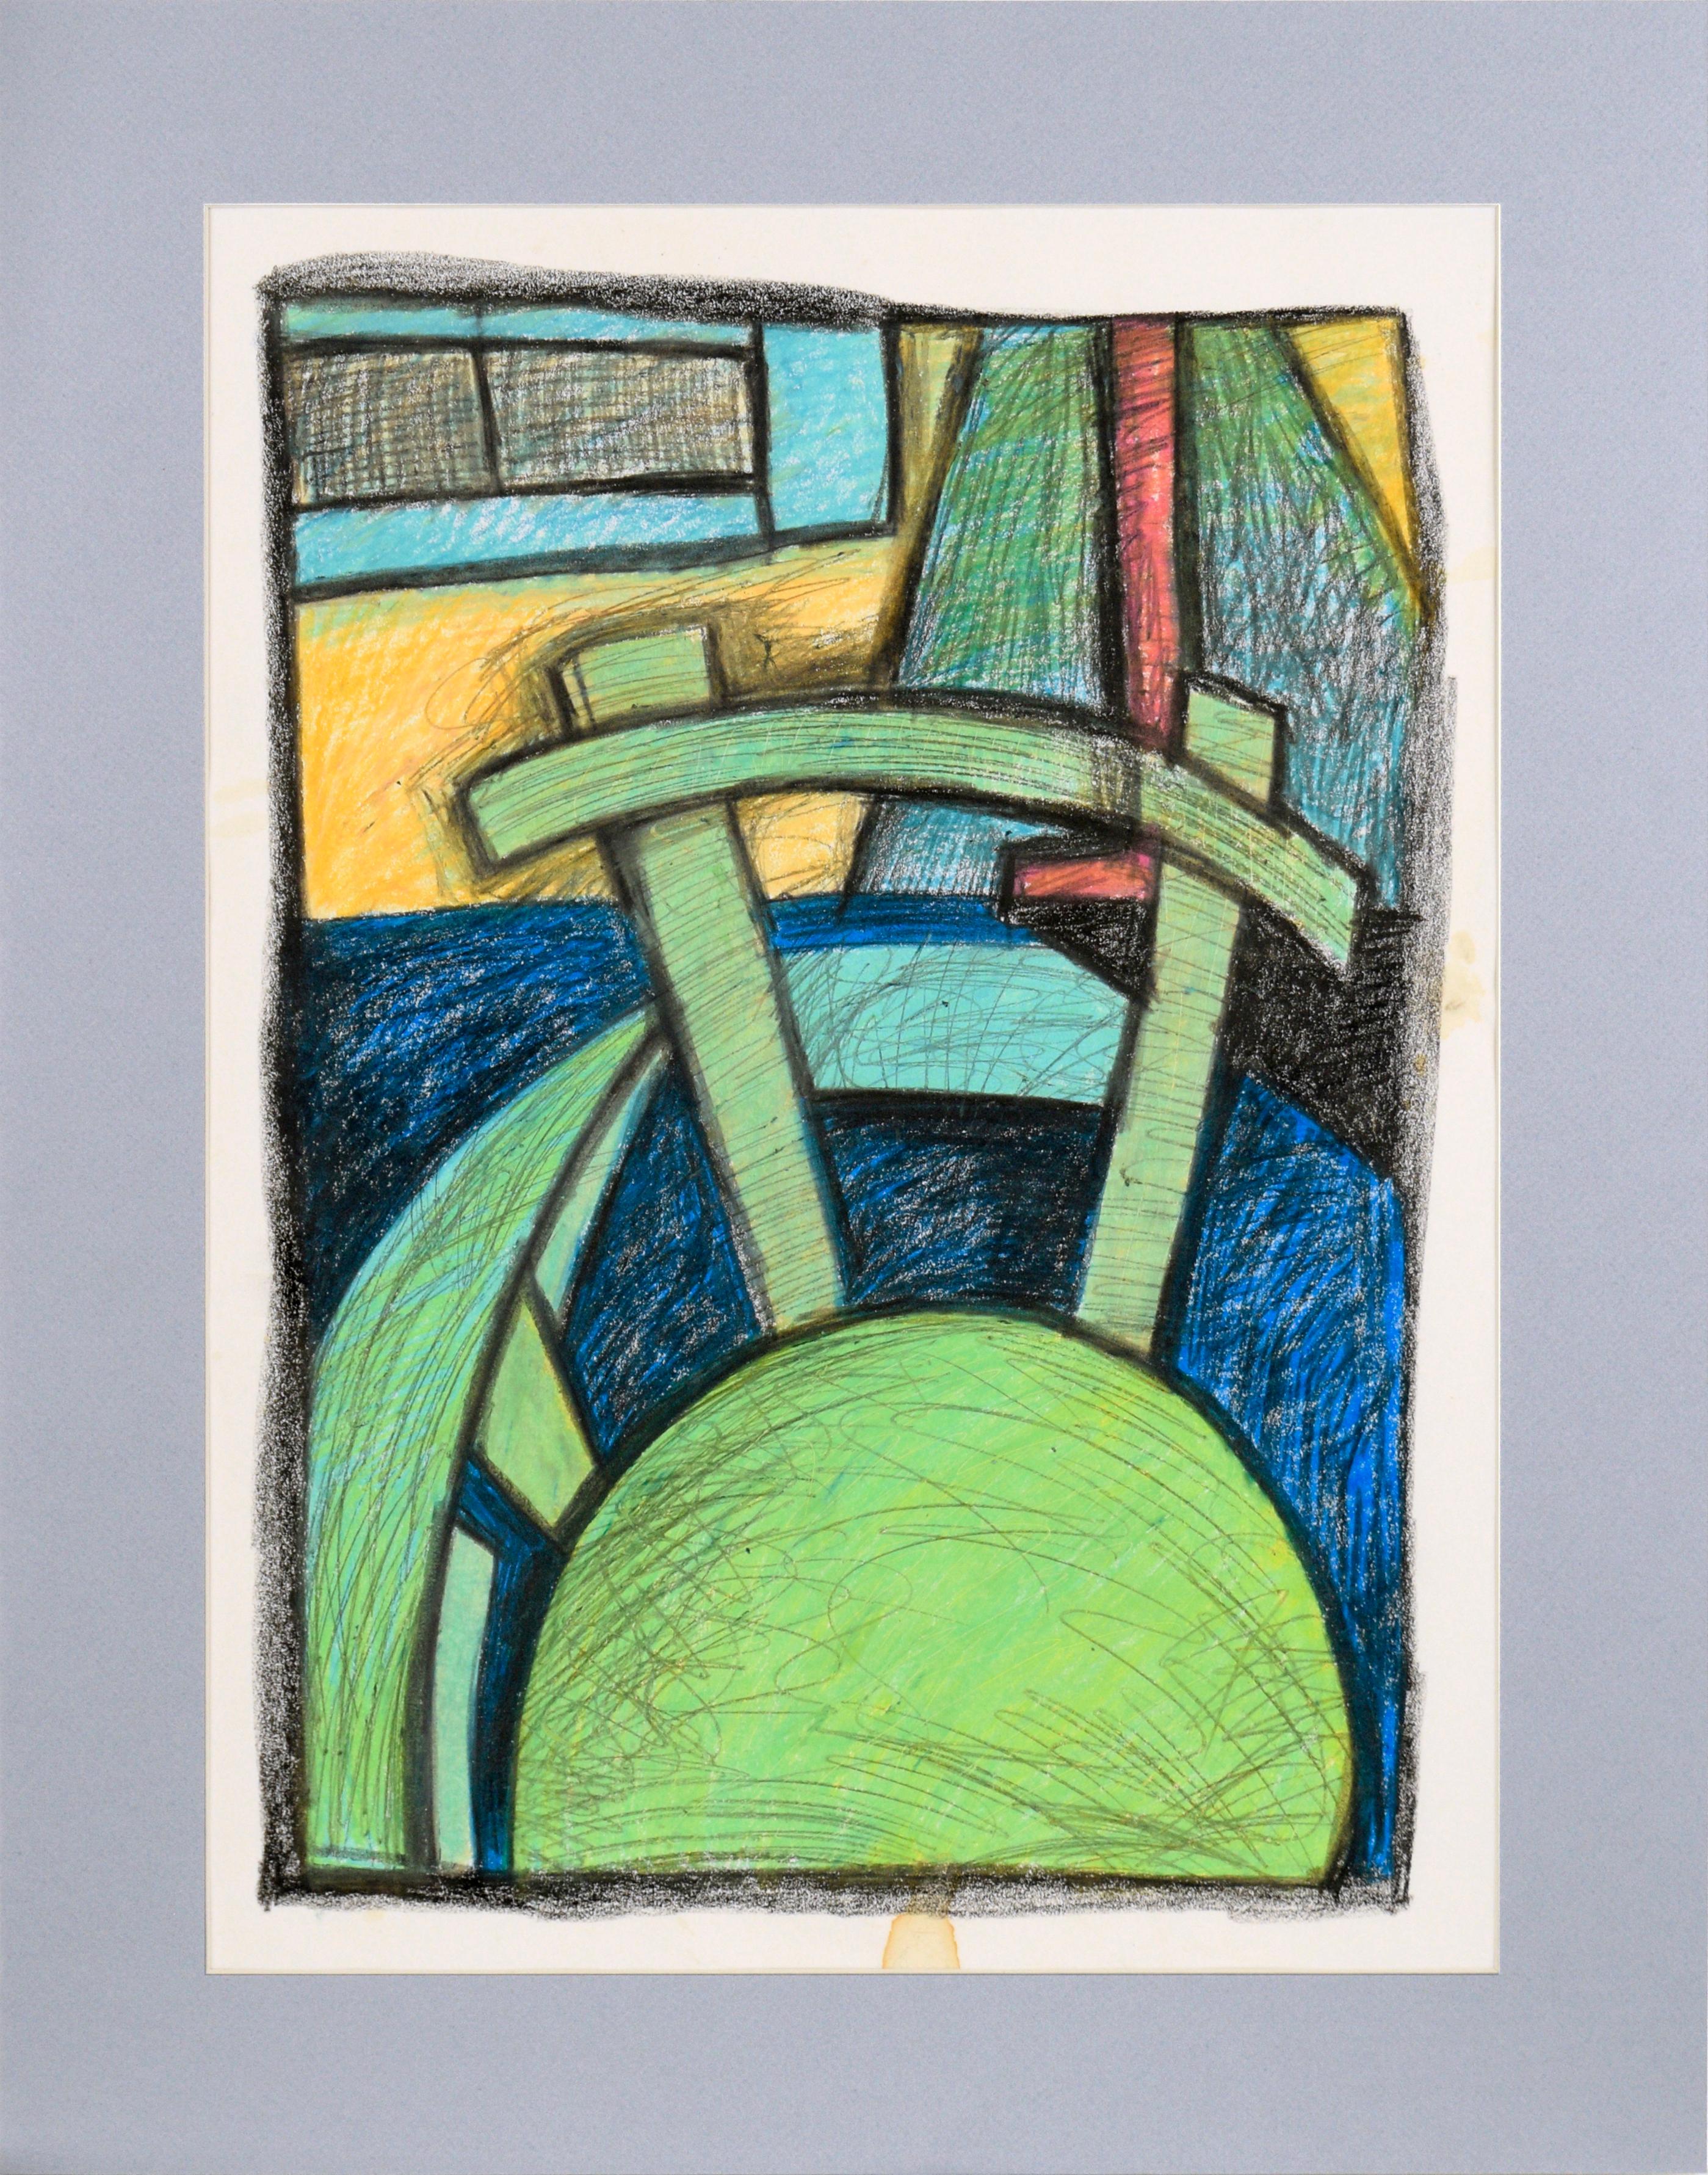 Michael William Eggleston Interior Art - The Desk Chair - Cubist Interior Scene in crayon on Paper